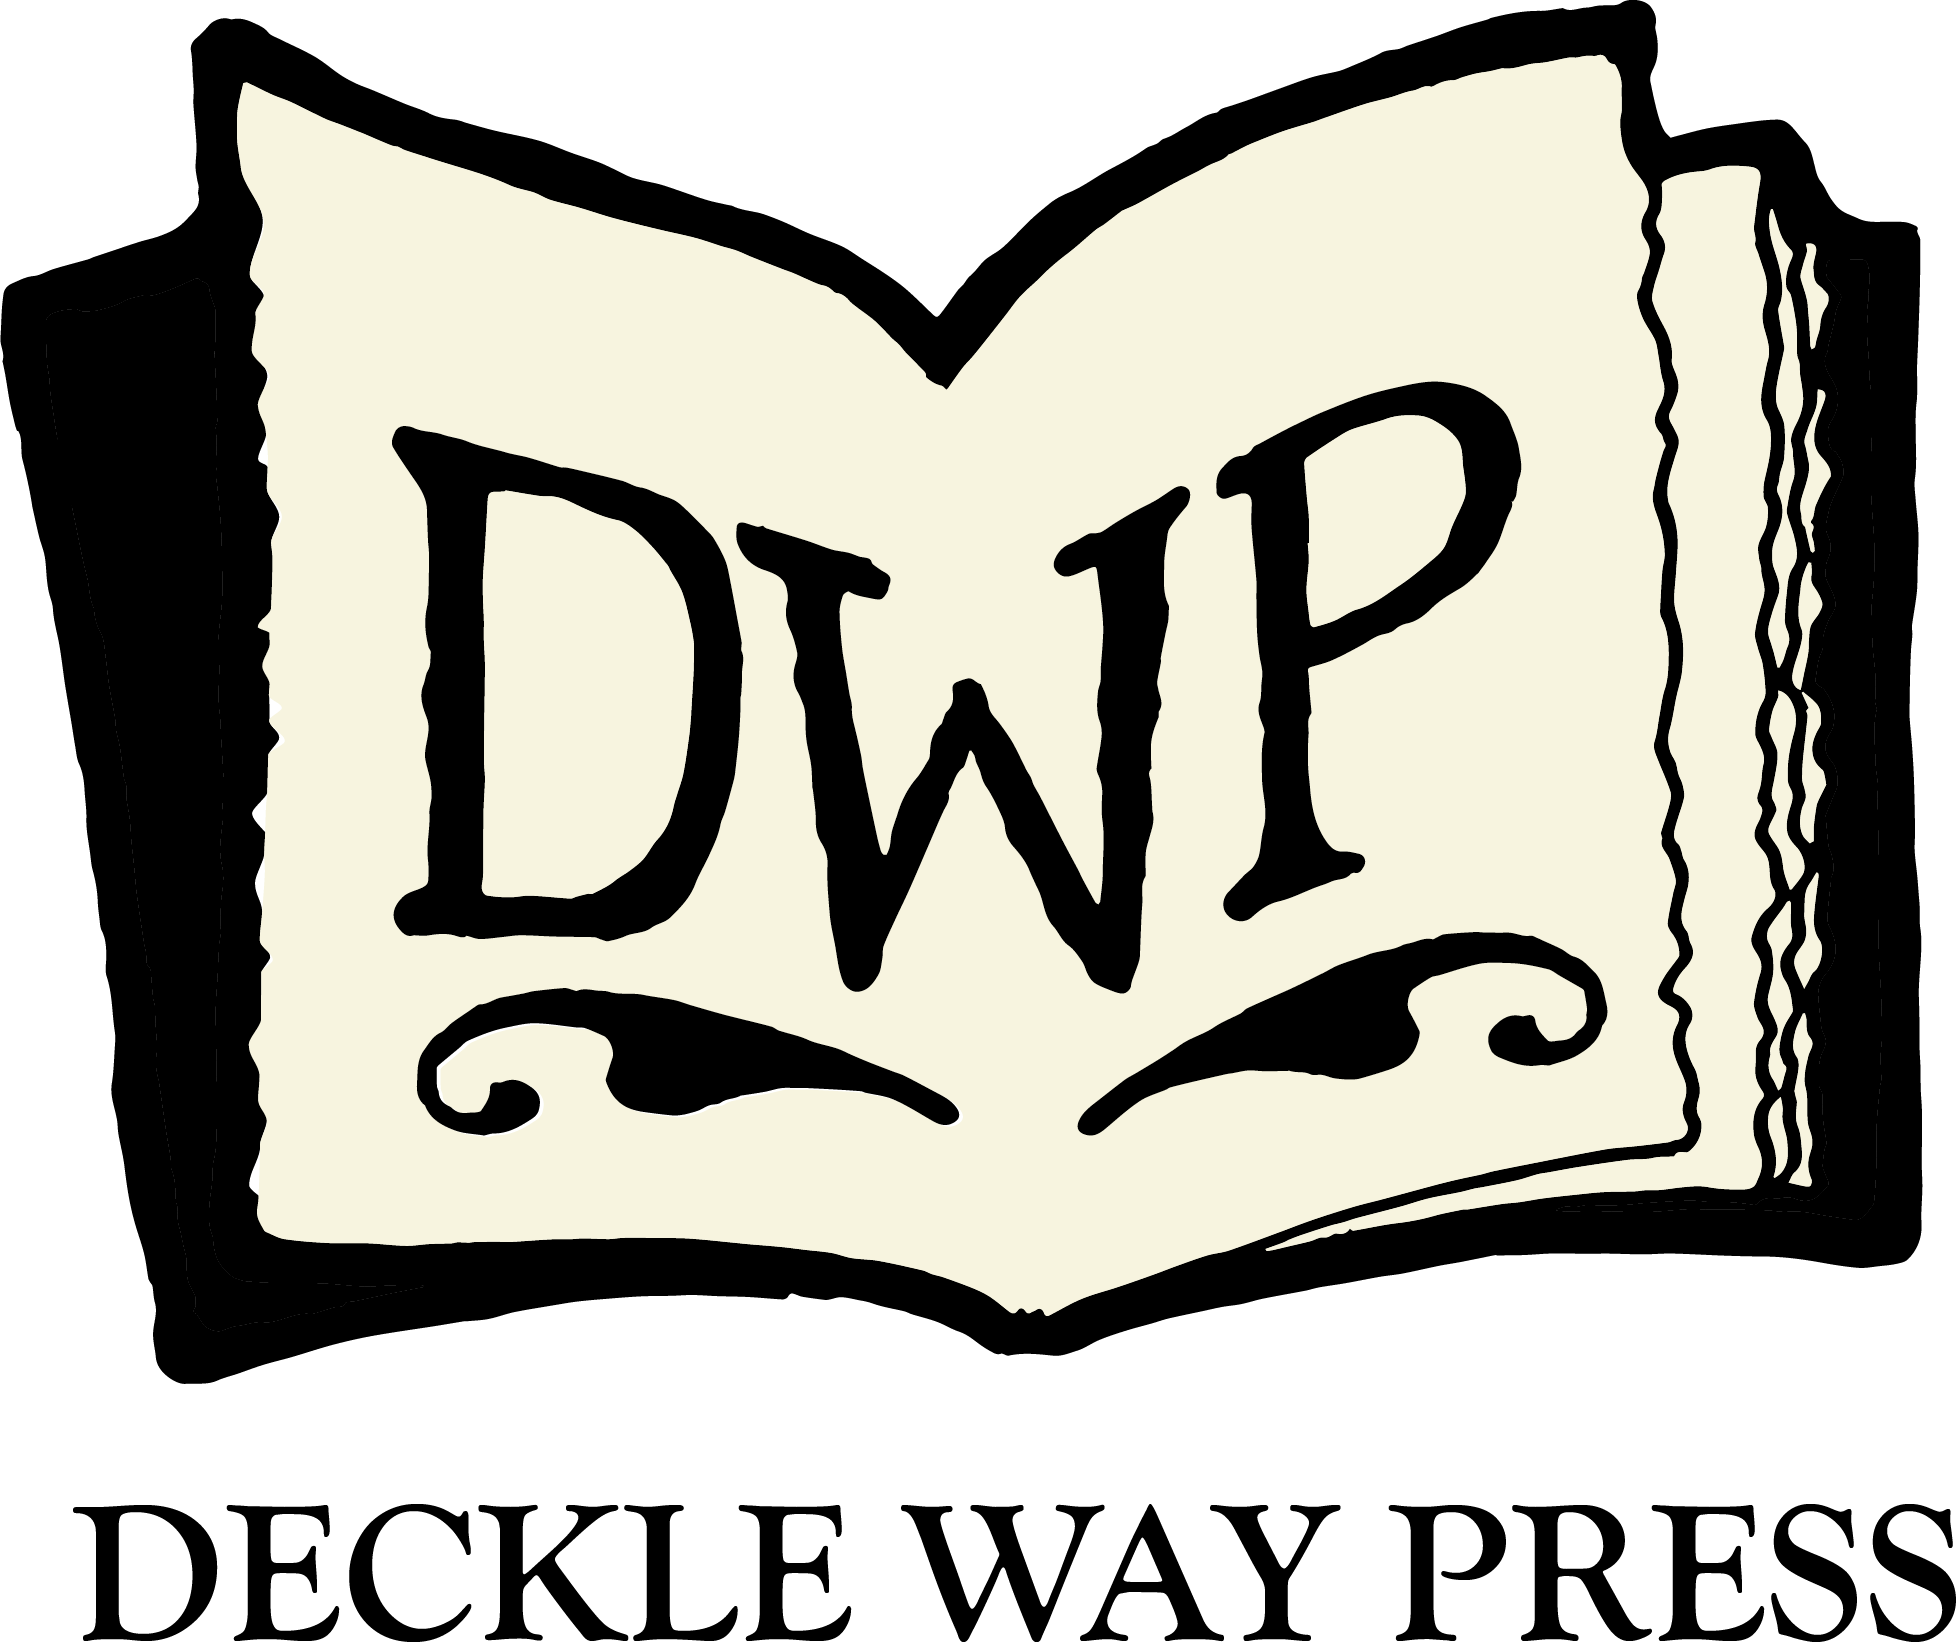 she book - deckle way press logo